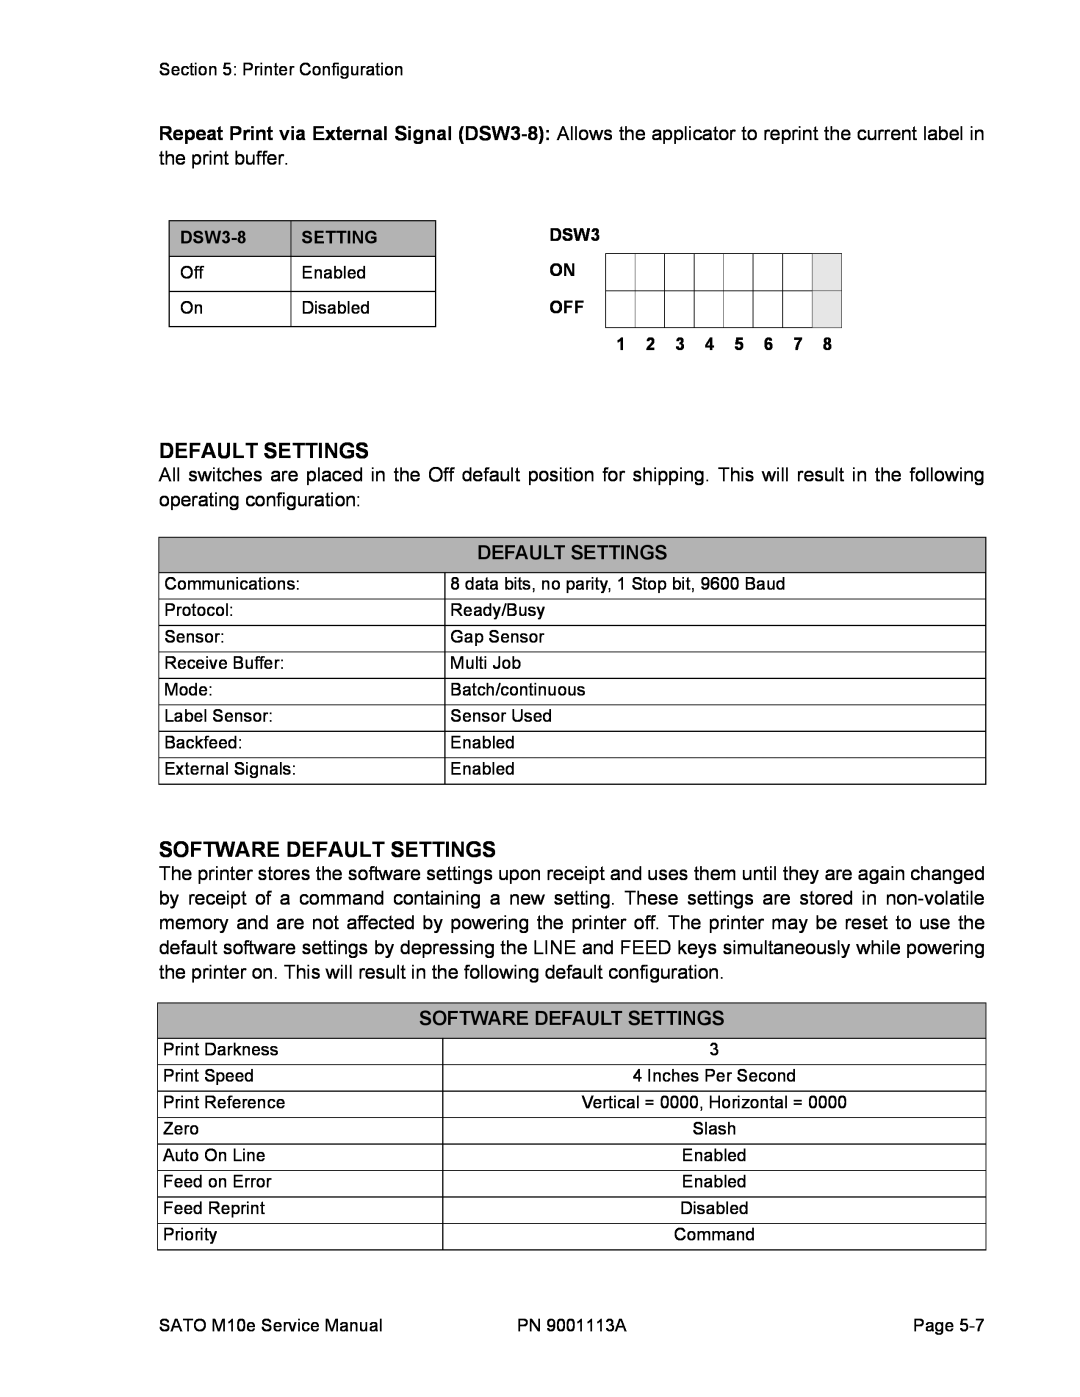 SATO 10e service manual Software Default Settings 